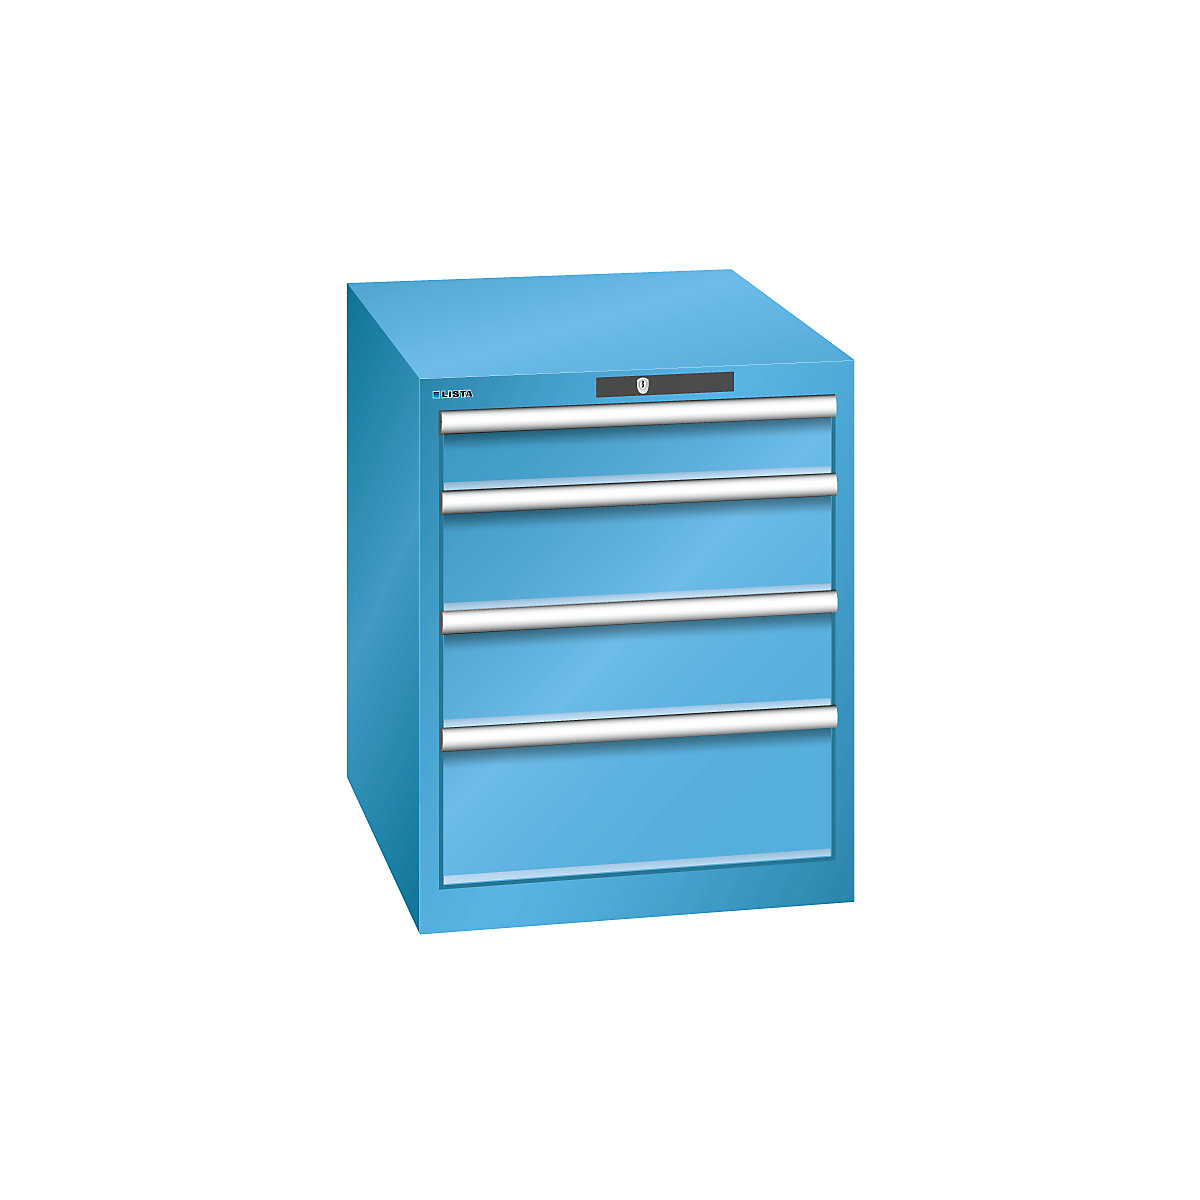 Drawer cupboard, 4 drawers - LISTA